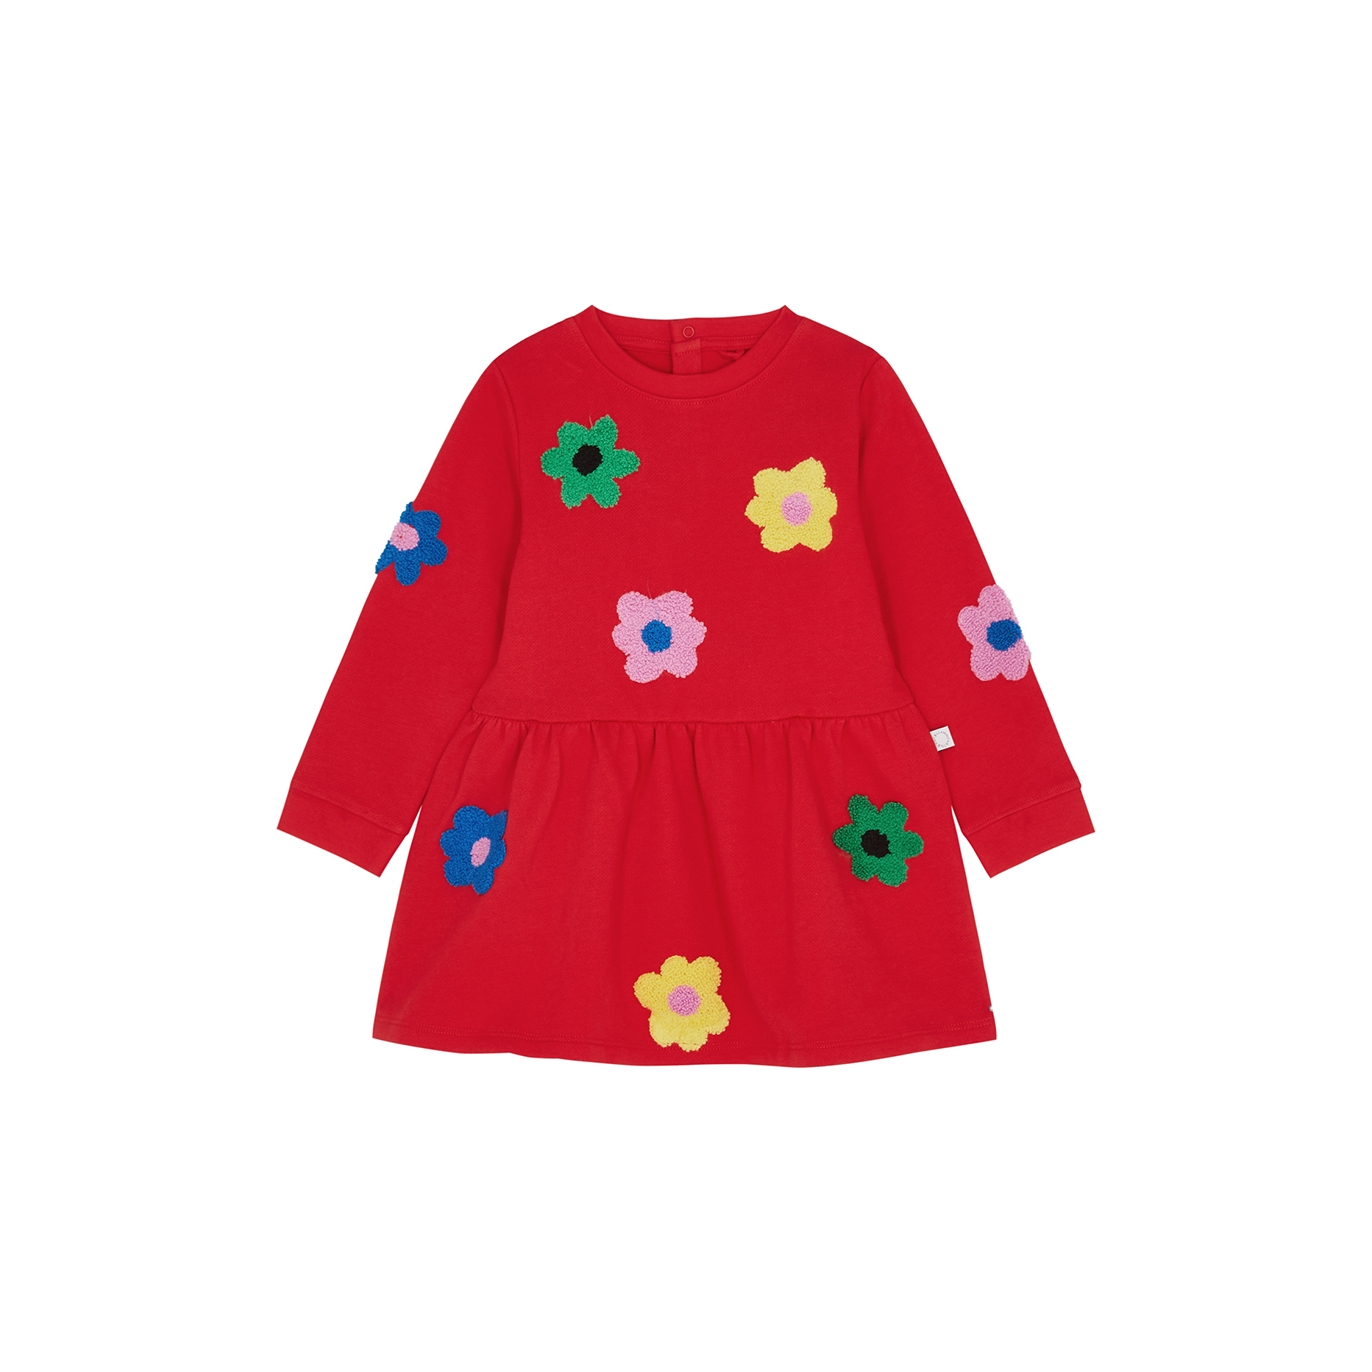 Stella McCartney Kids Red Floral-appliquéd Cotton Dress - Red Other - 24 Months